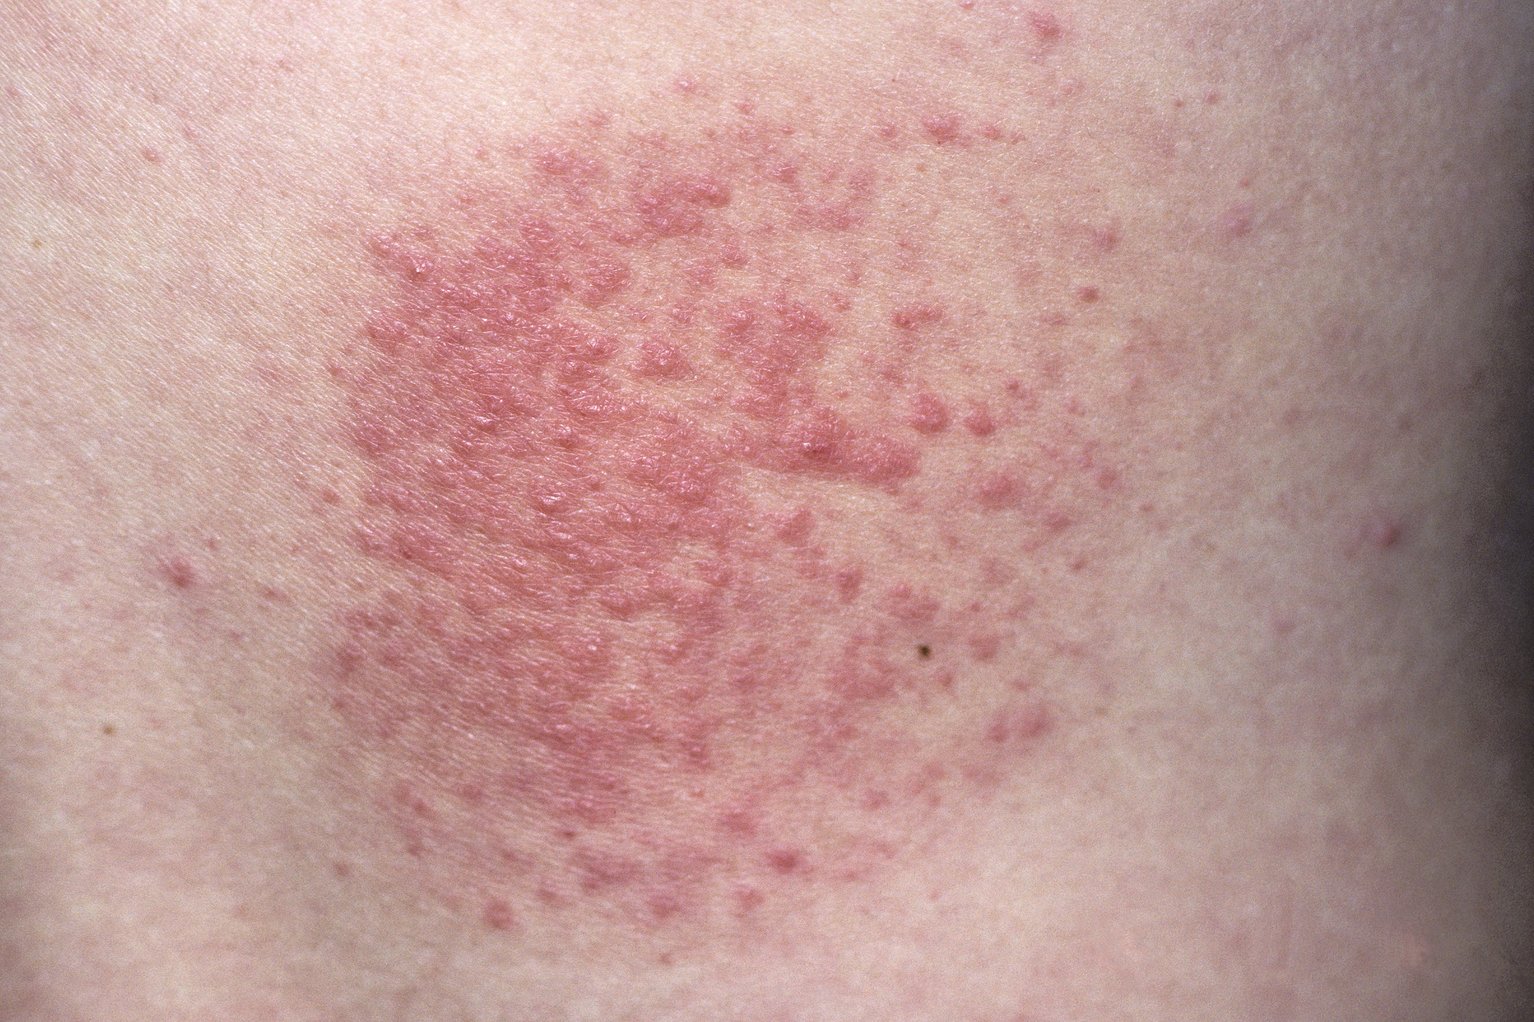 smallpox skin eruption